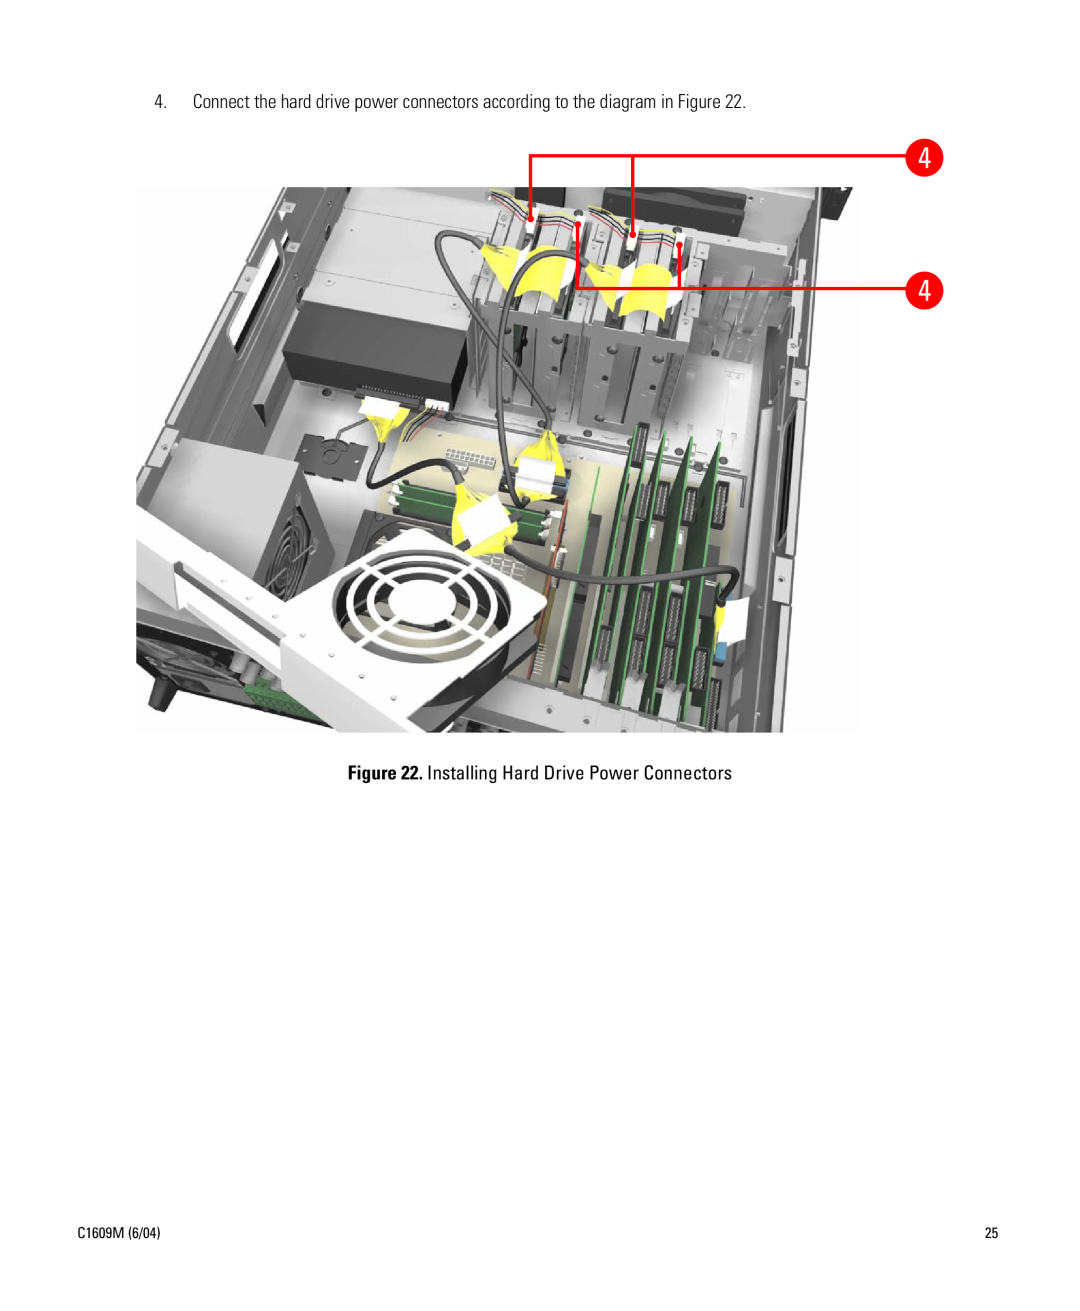 Pelco Dx8000 manual Installing Hard Drive Power Connectors, C1609M 6/04 